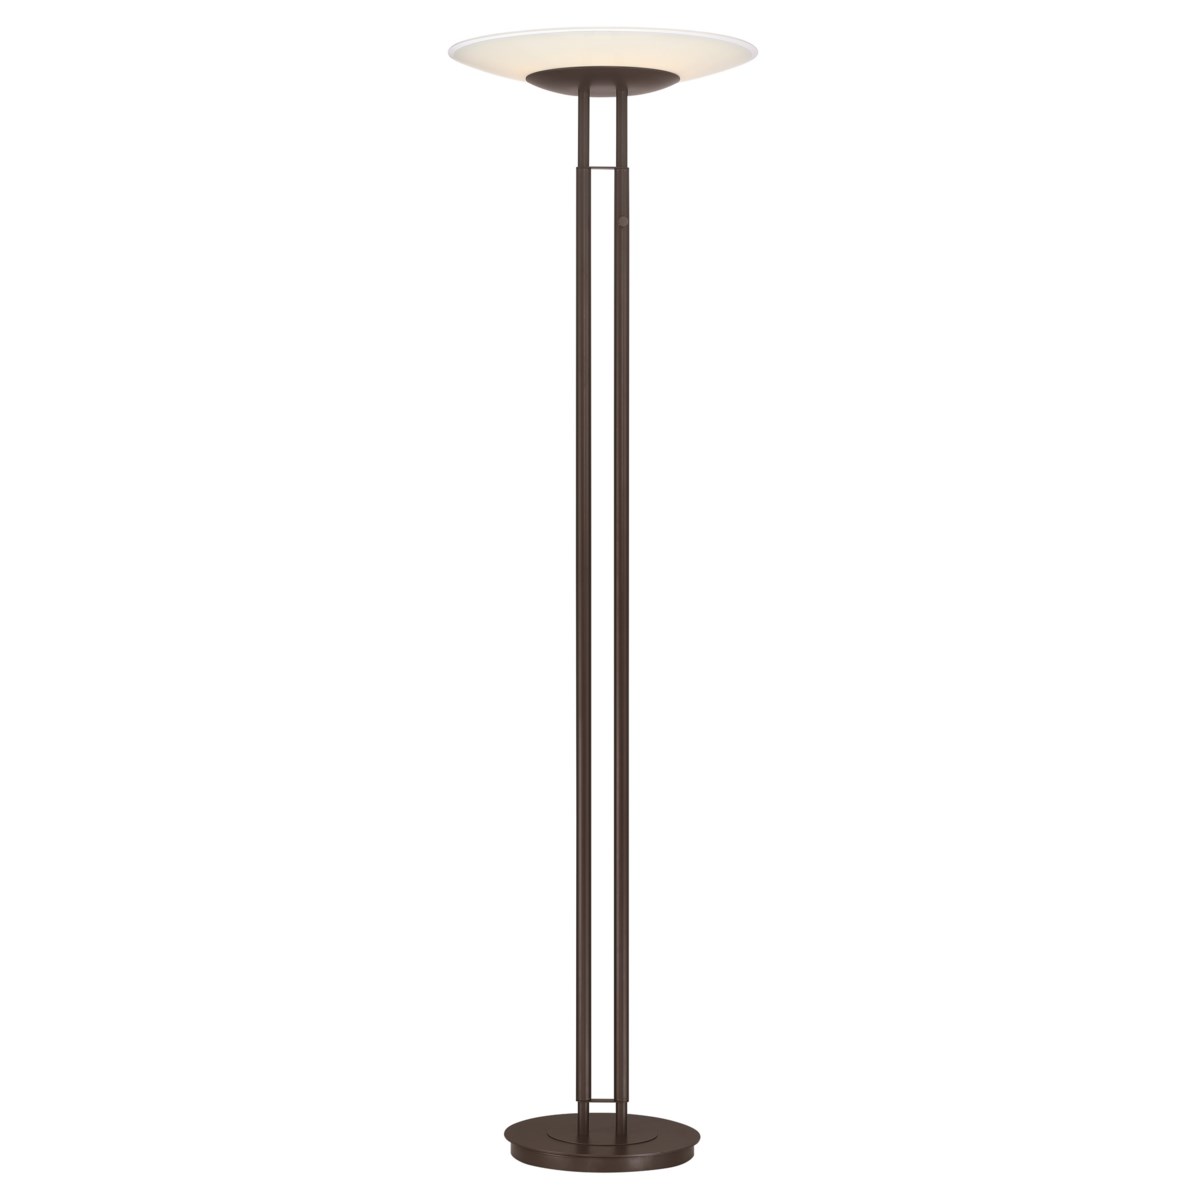 Dubai Floor Lamp in Bronze